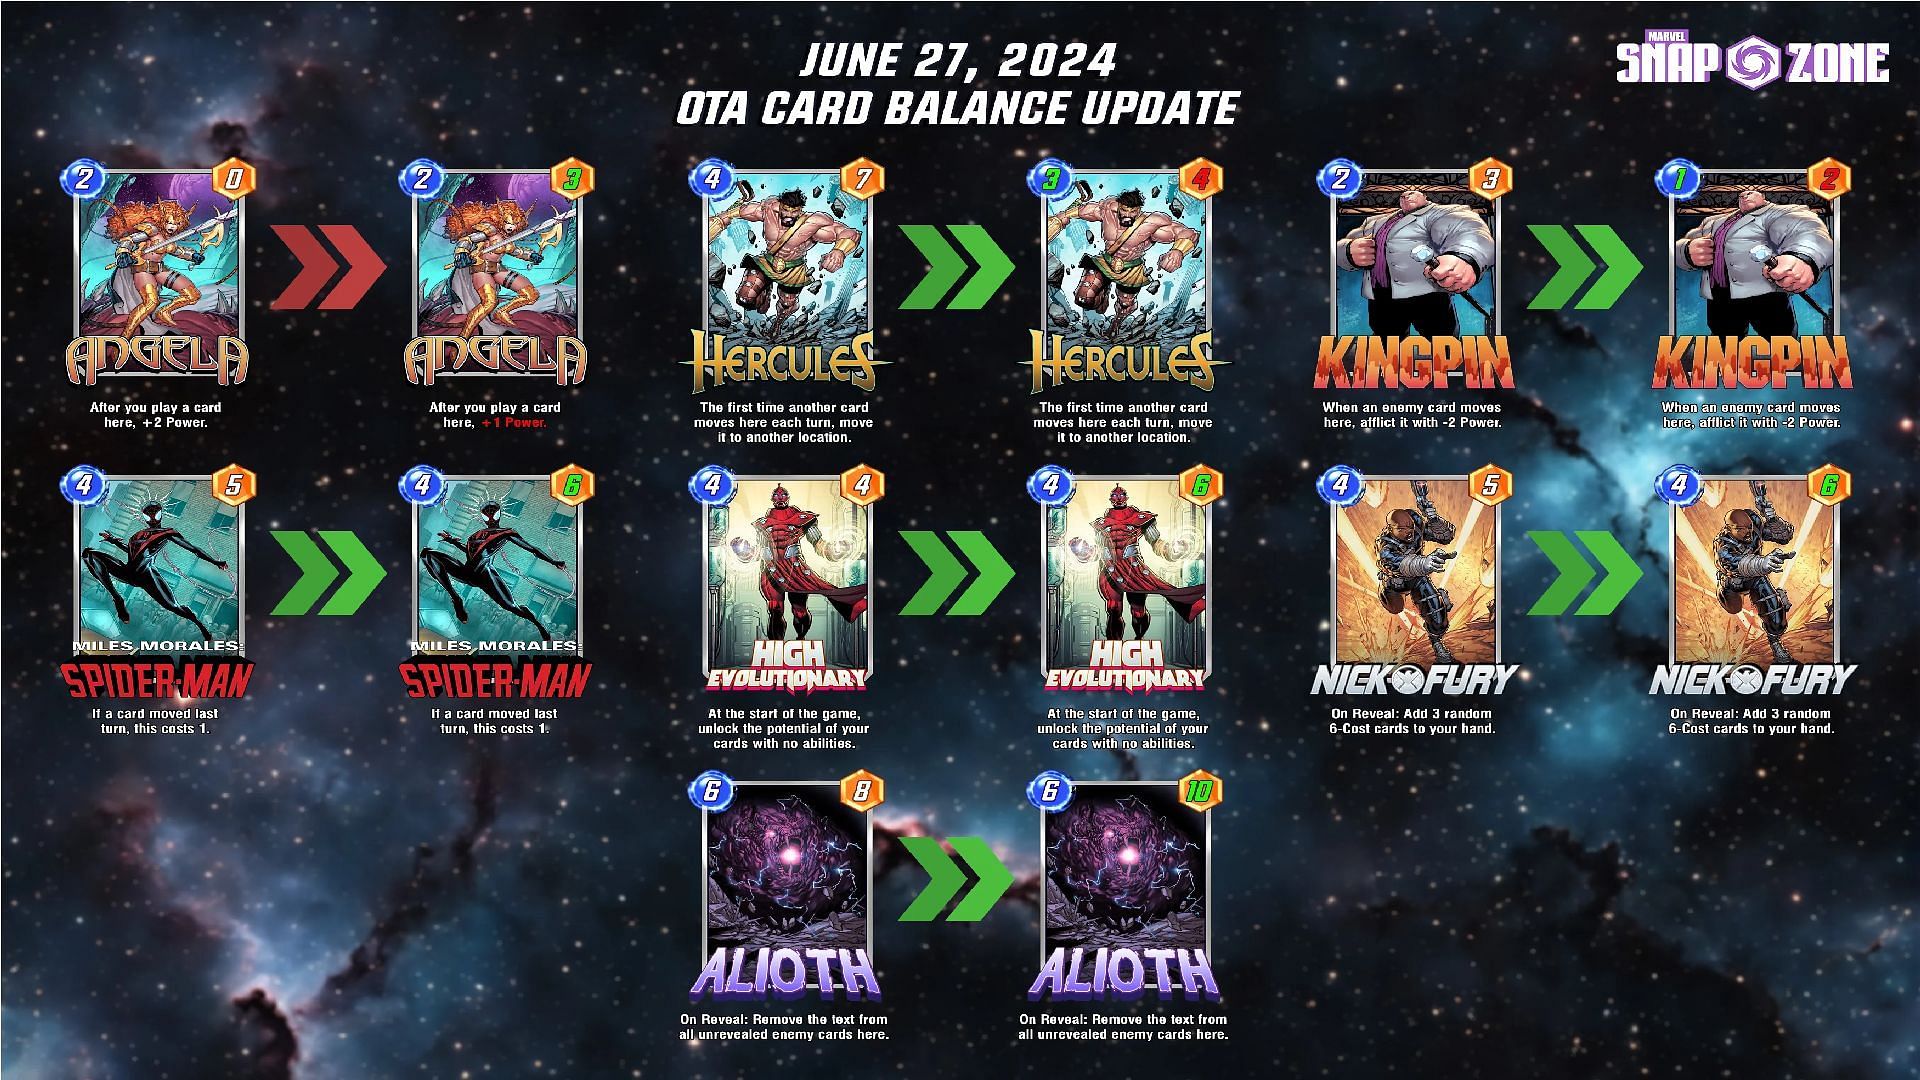 Marvel Snap June 27 OTA Balance update